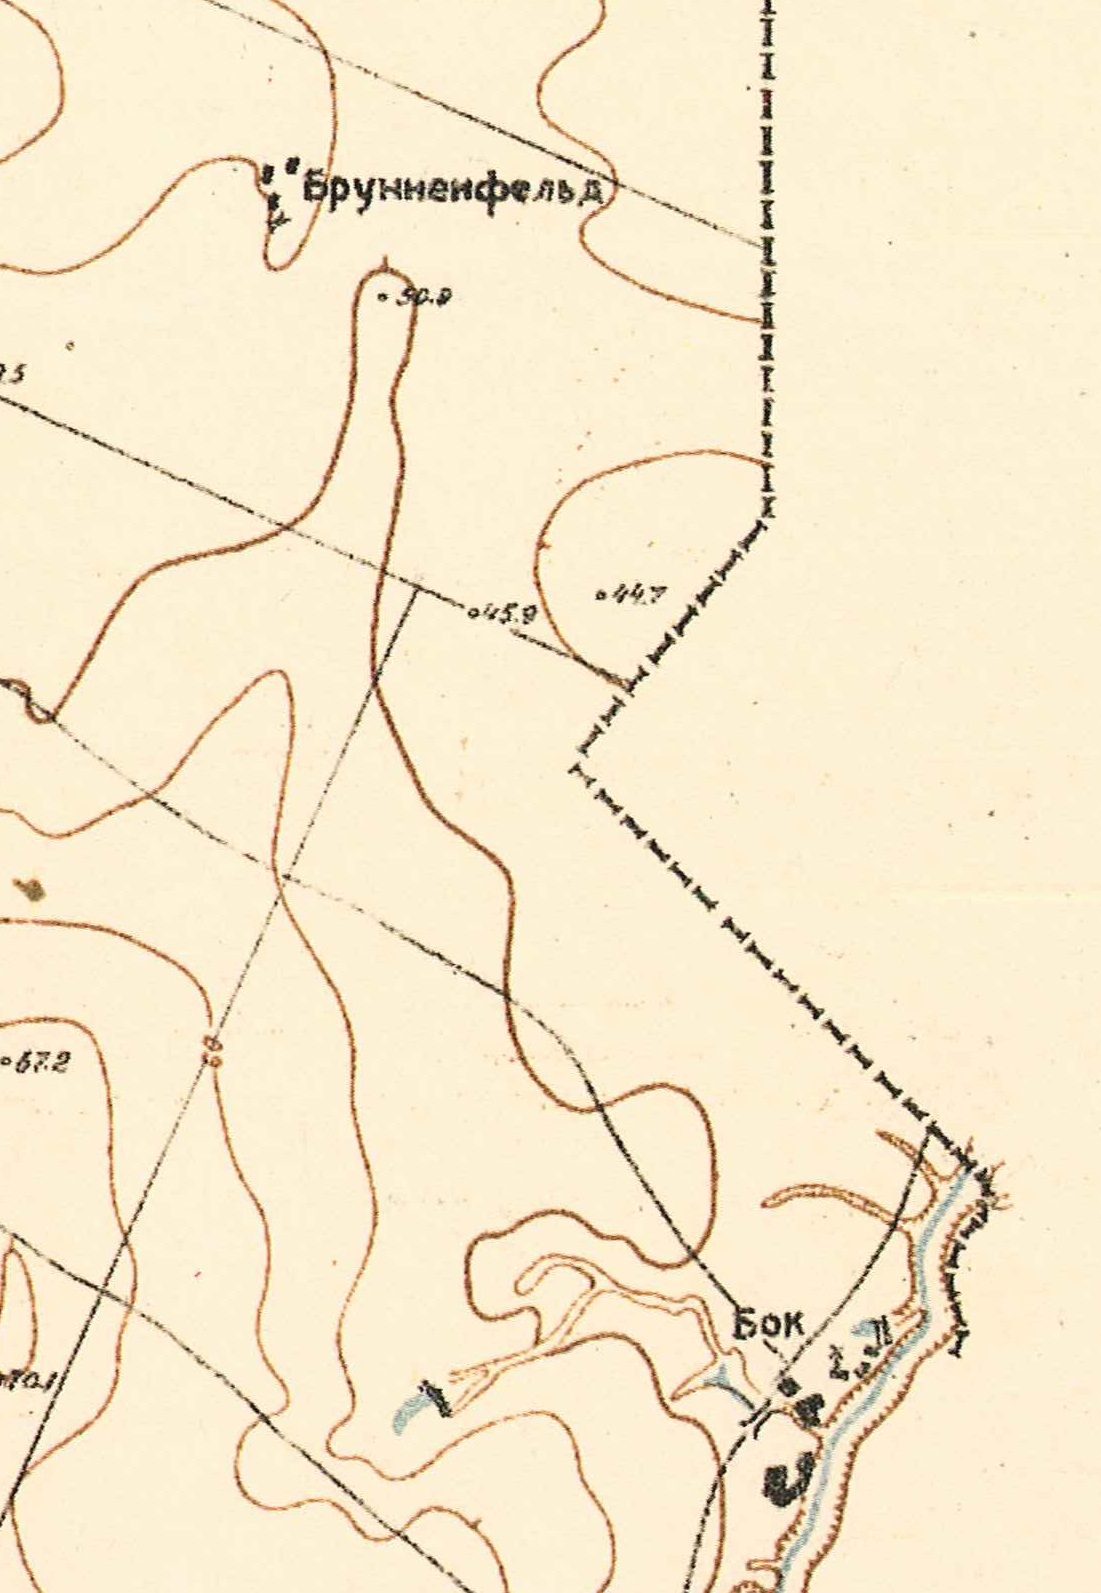 Map showing Brunnenfeld northwest of Bock (1935).